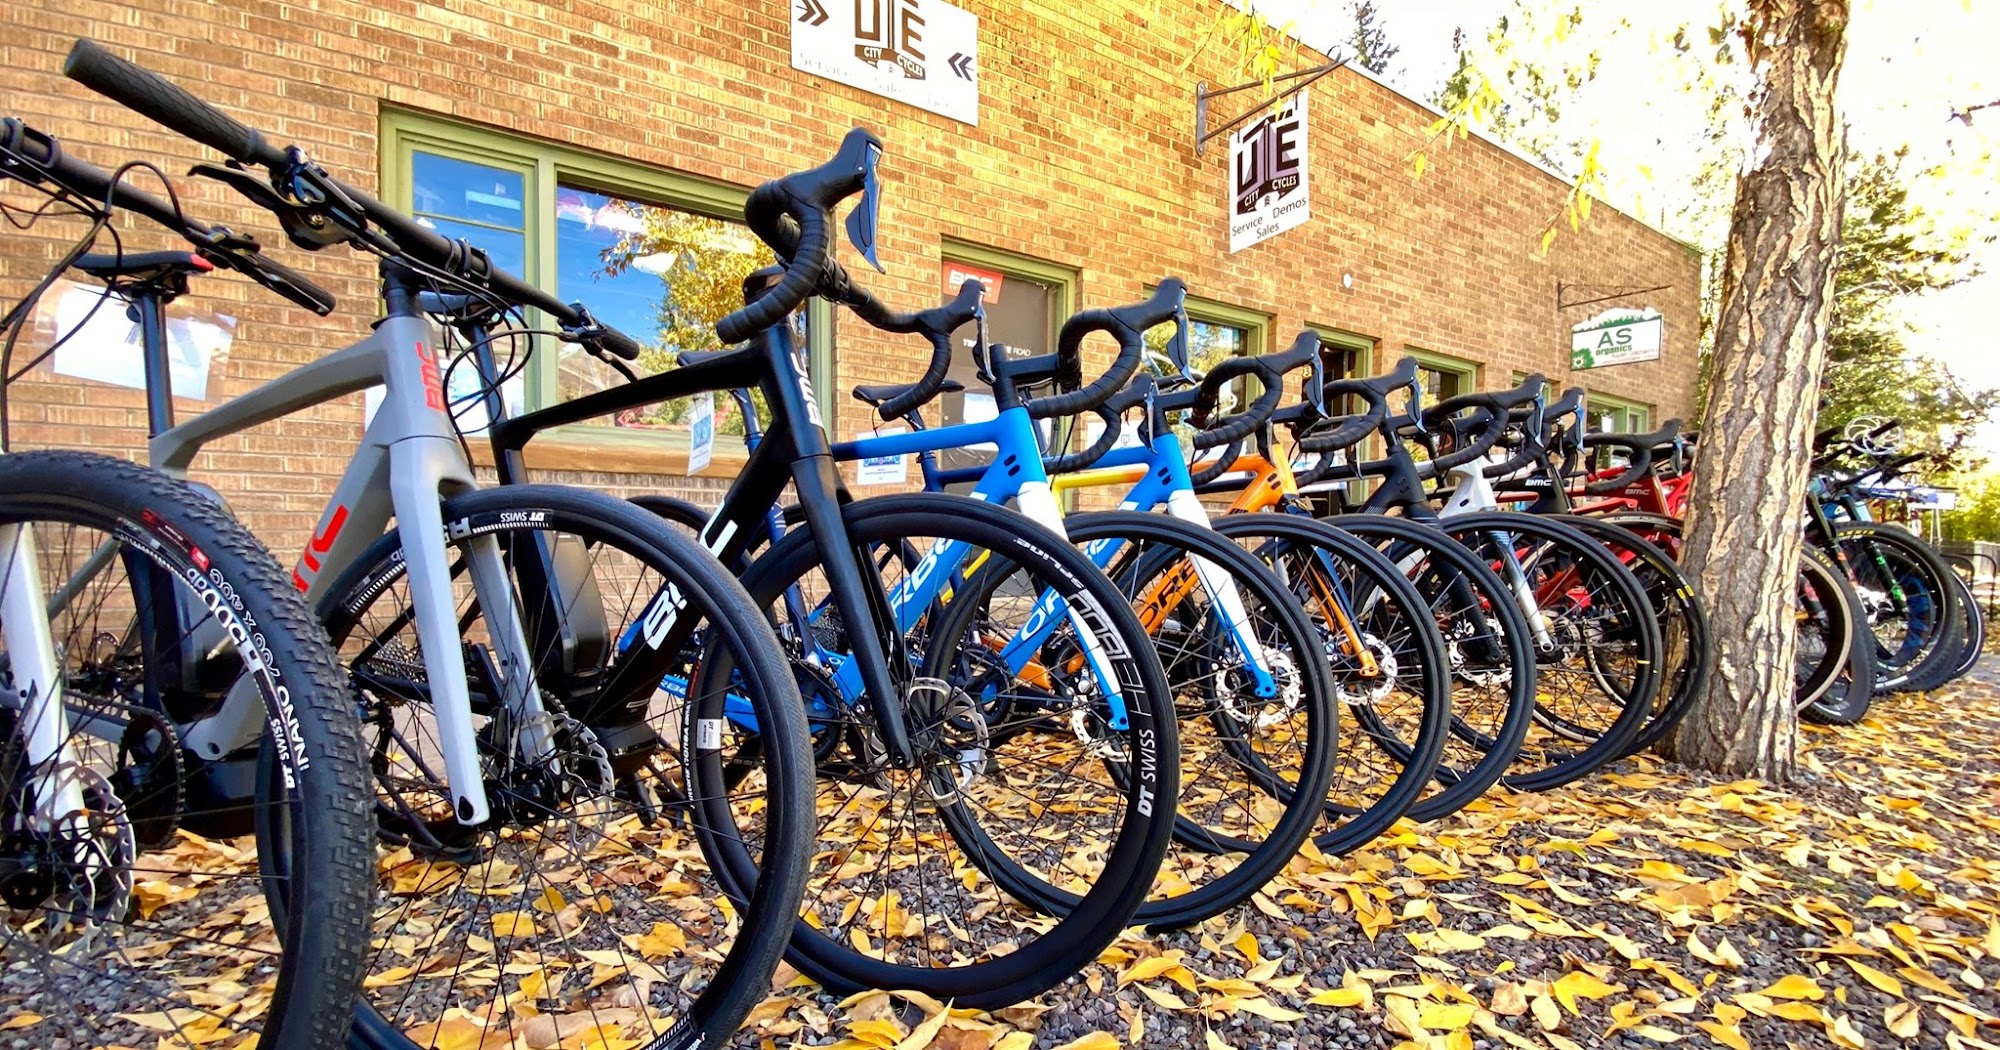 Ute City Cycles